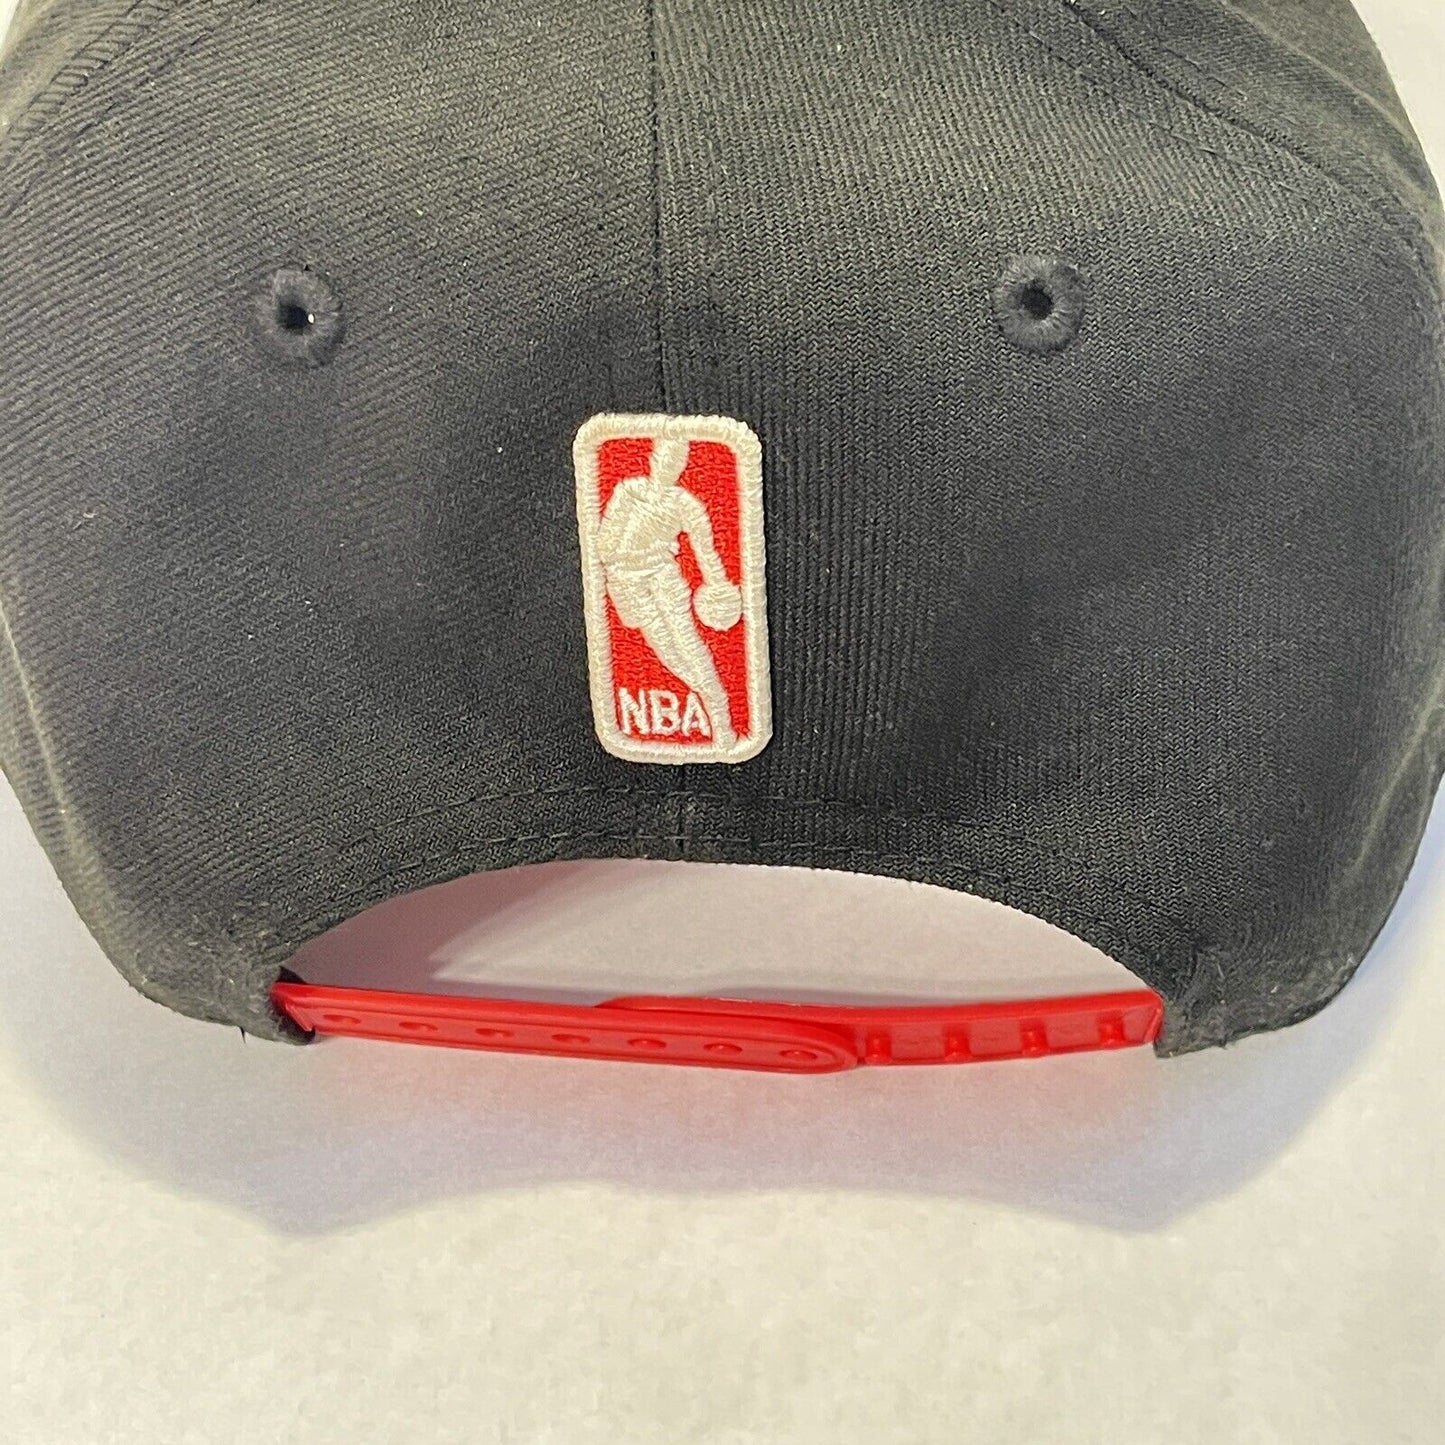 Chicago Bulls Snapback Hat 9FIFTY New Era Black Red Cap NBA Basketball Mens